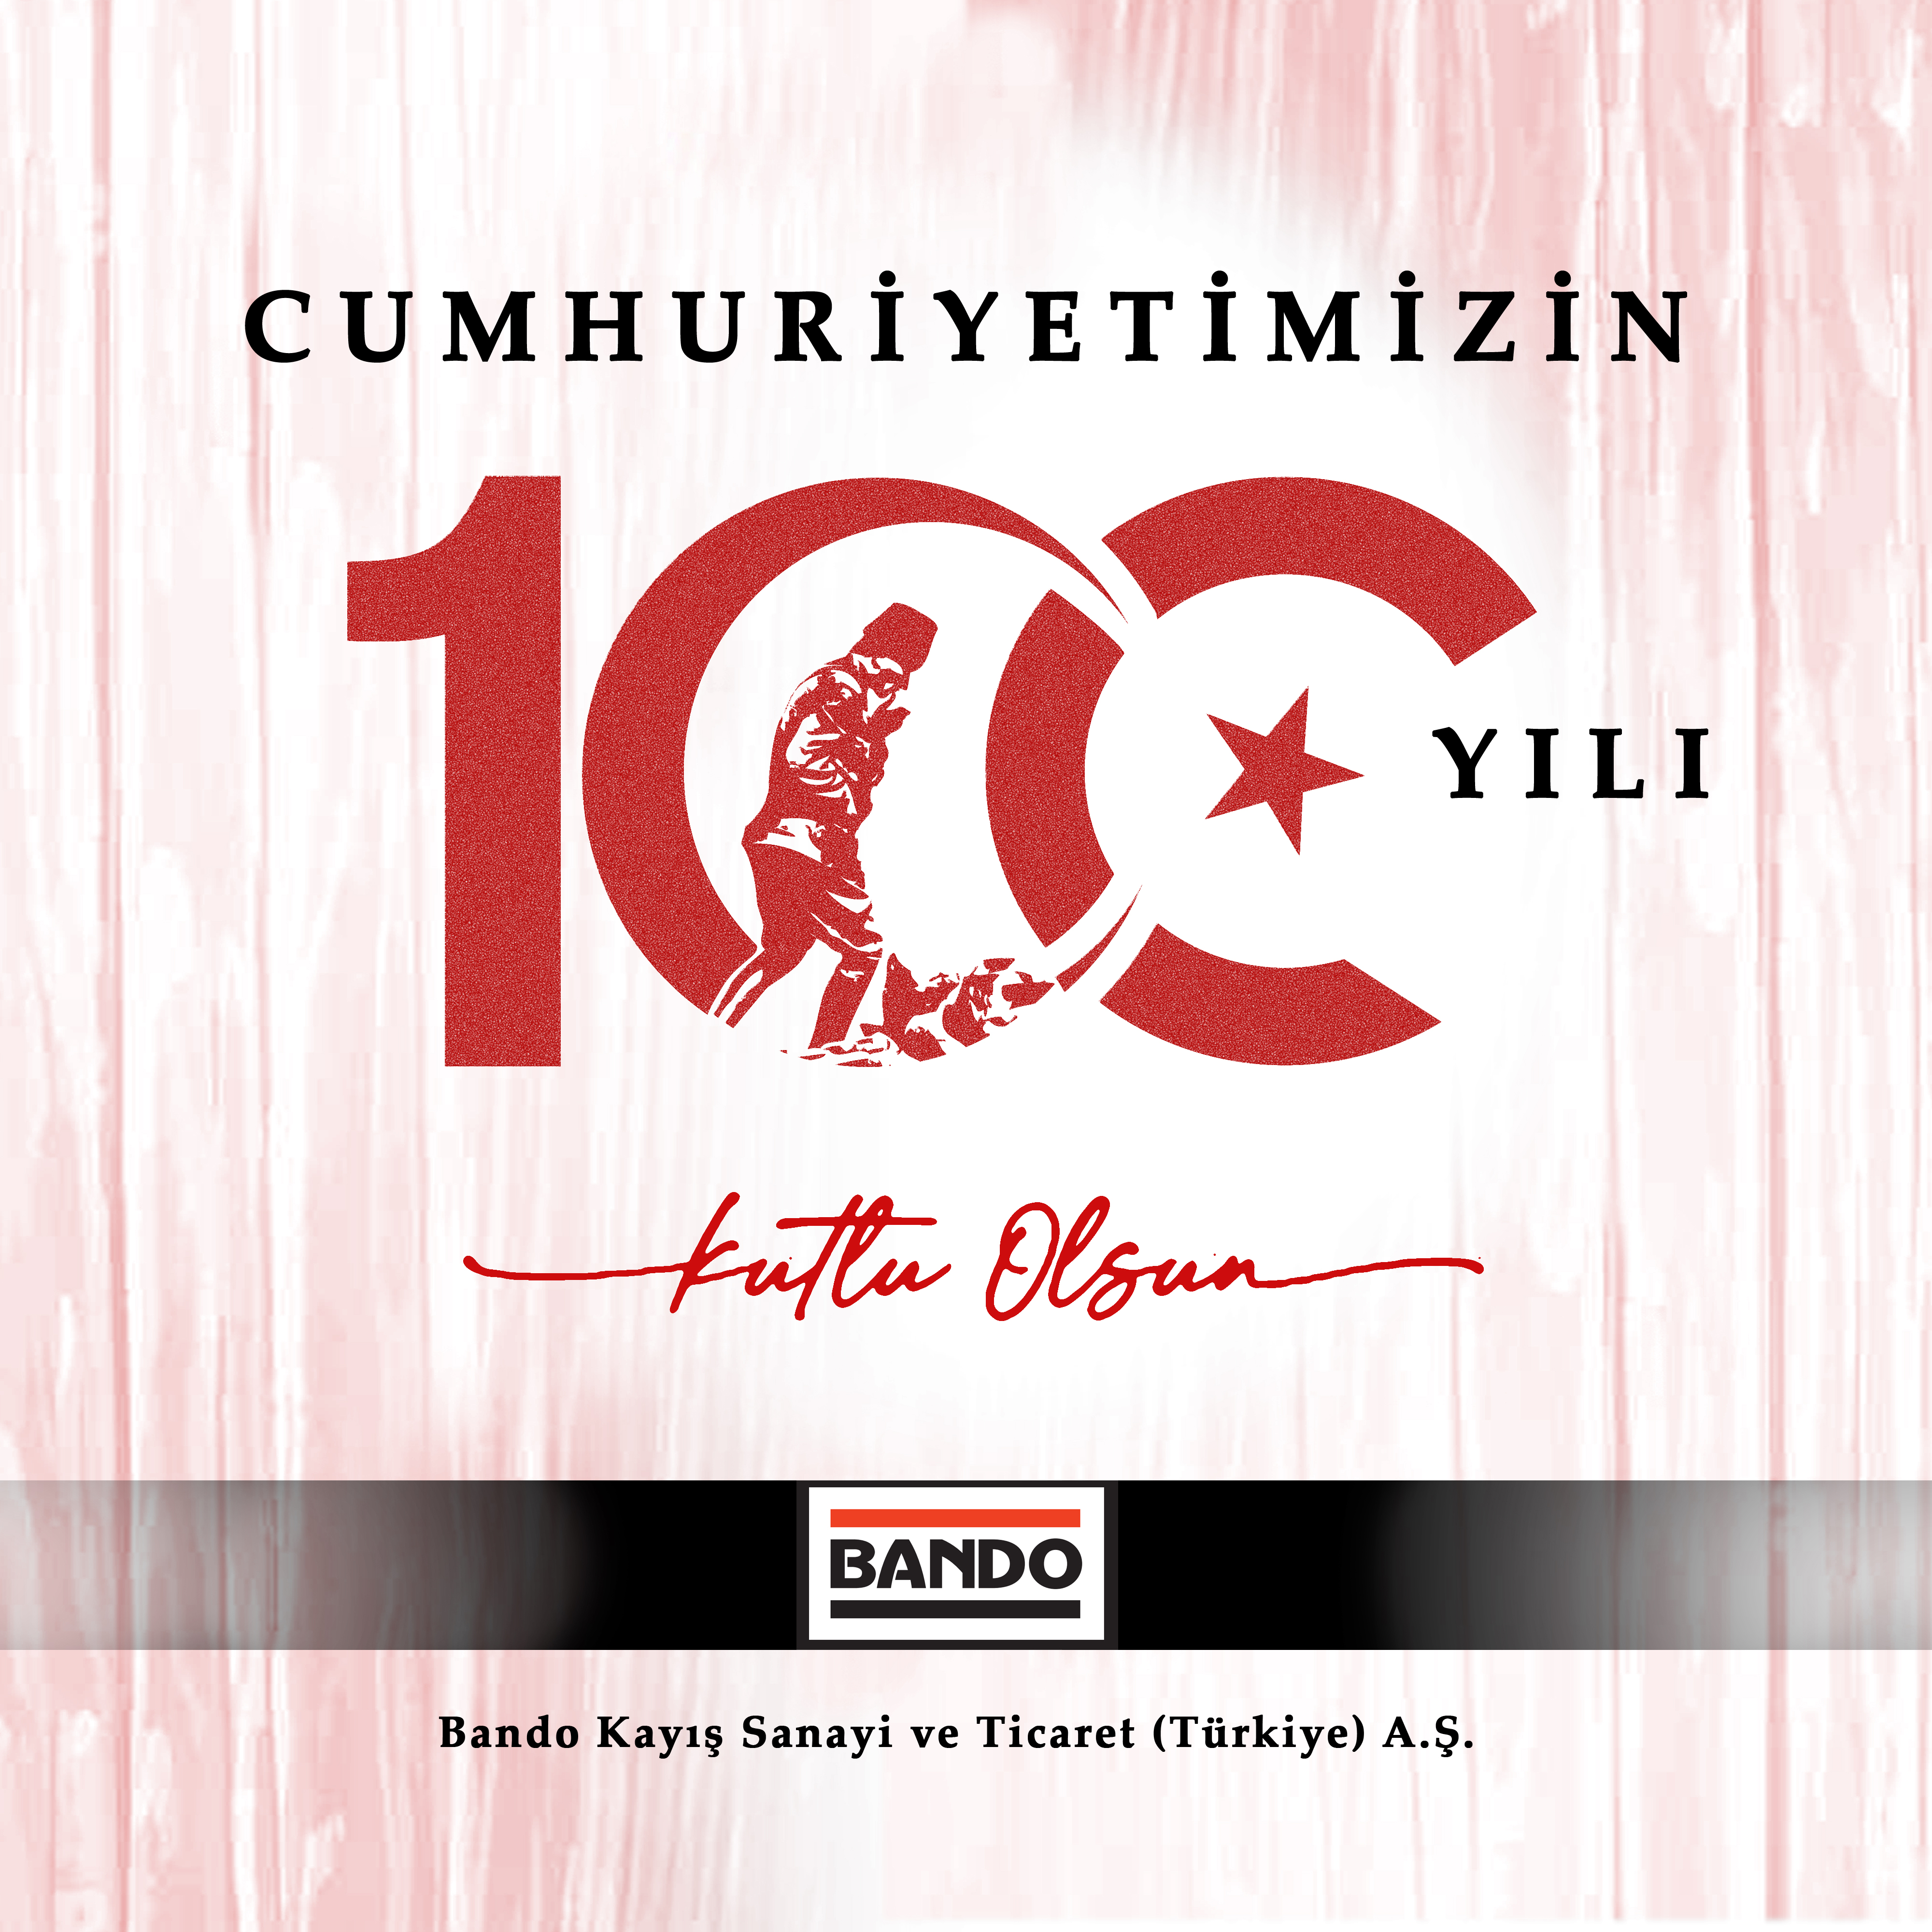 Happy 100th Anniversary of the Turkish Republic